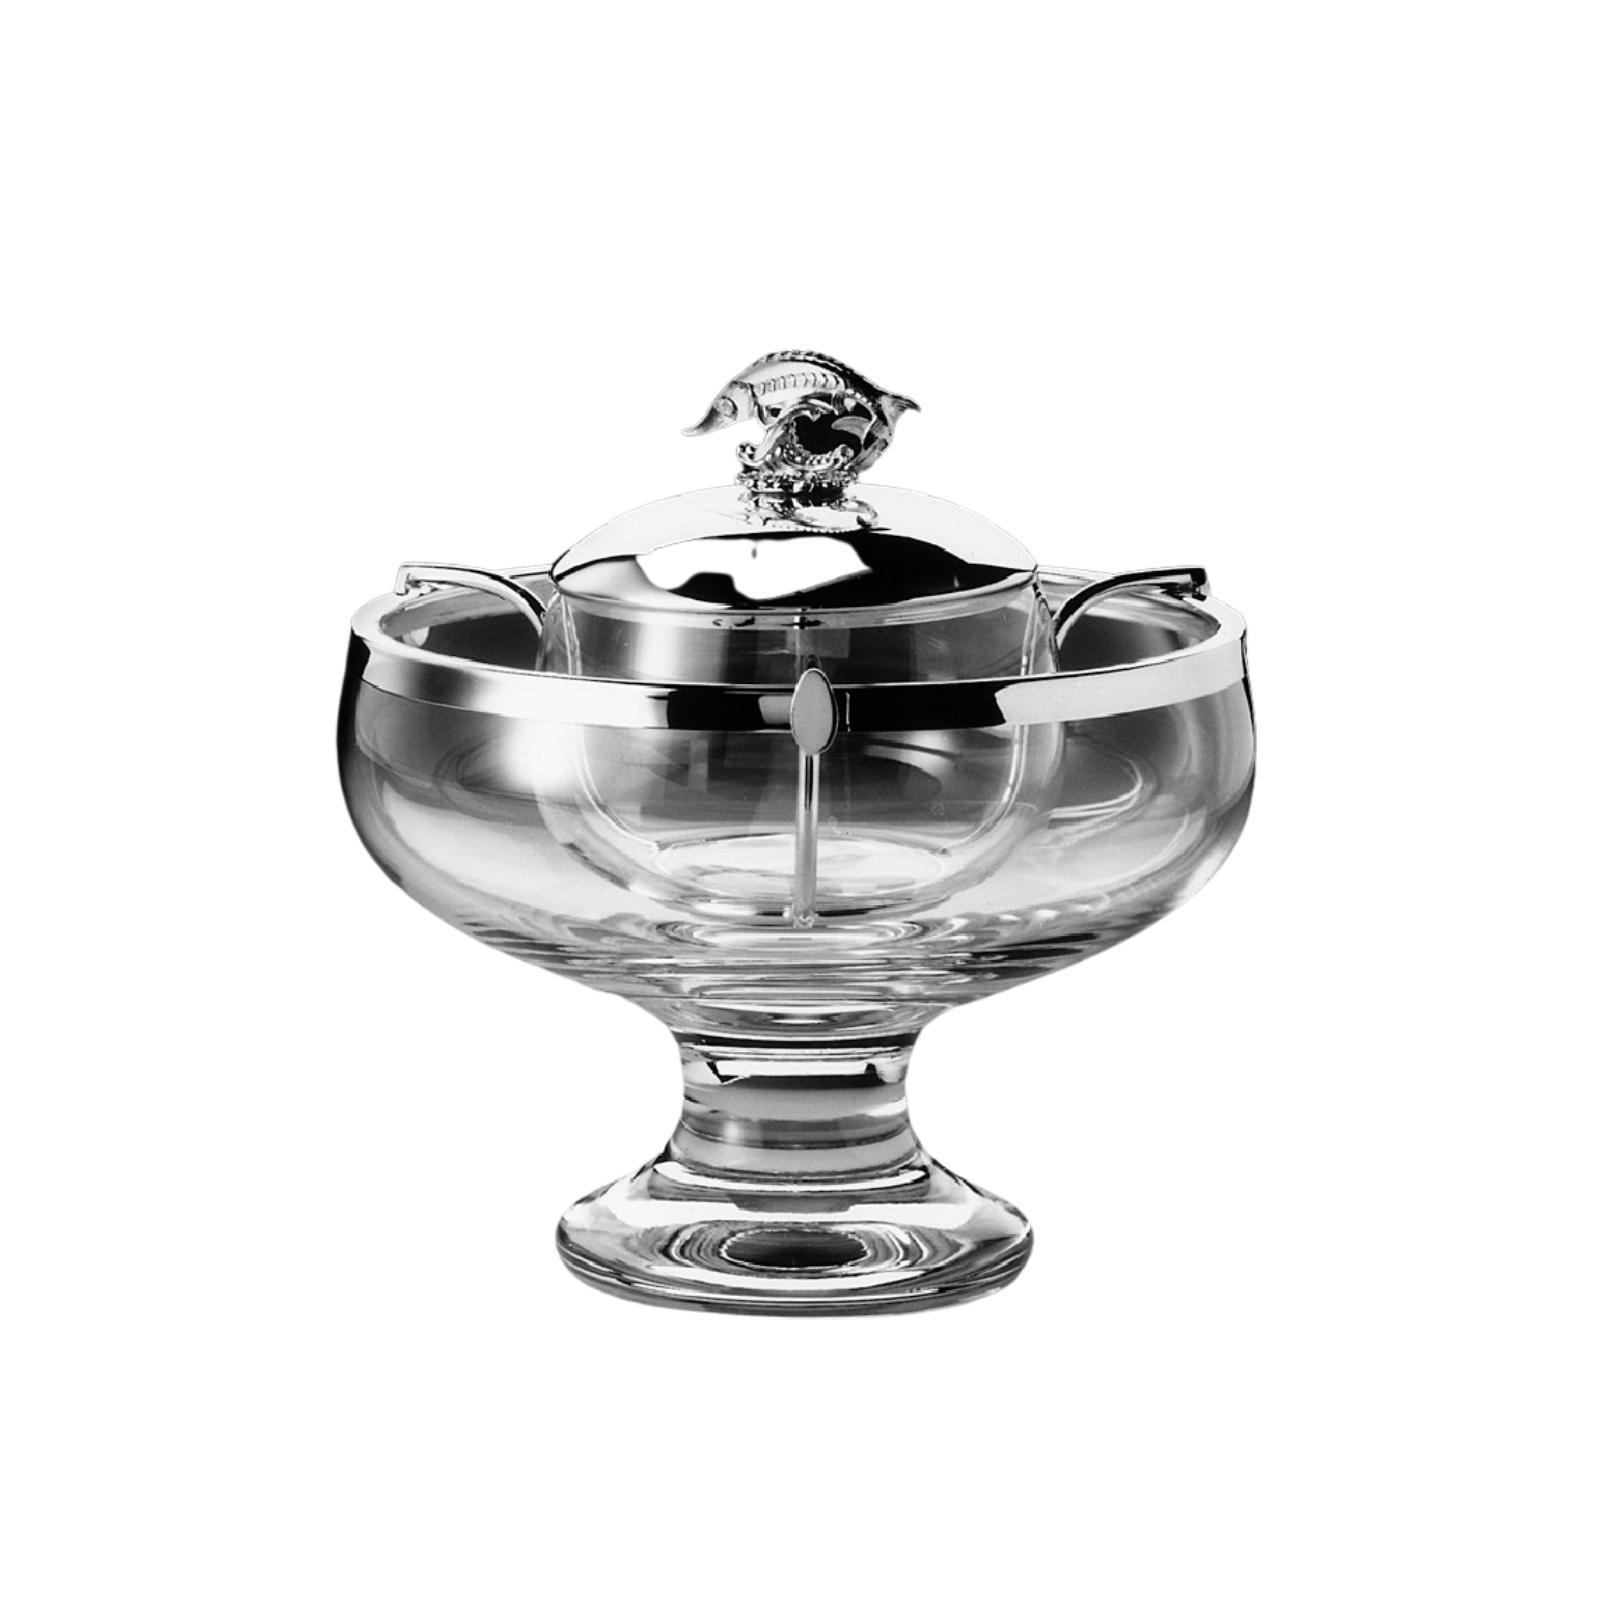 Caviar bowl 17 cm Tafelgeräte Silber Sterling Silver 925 Robbe  Berking